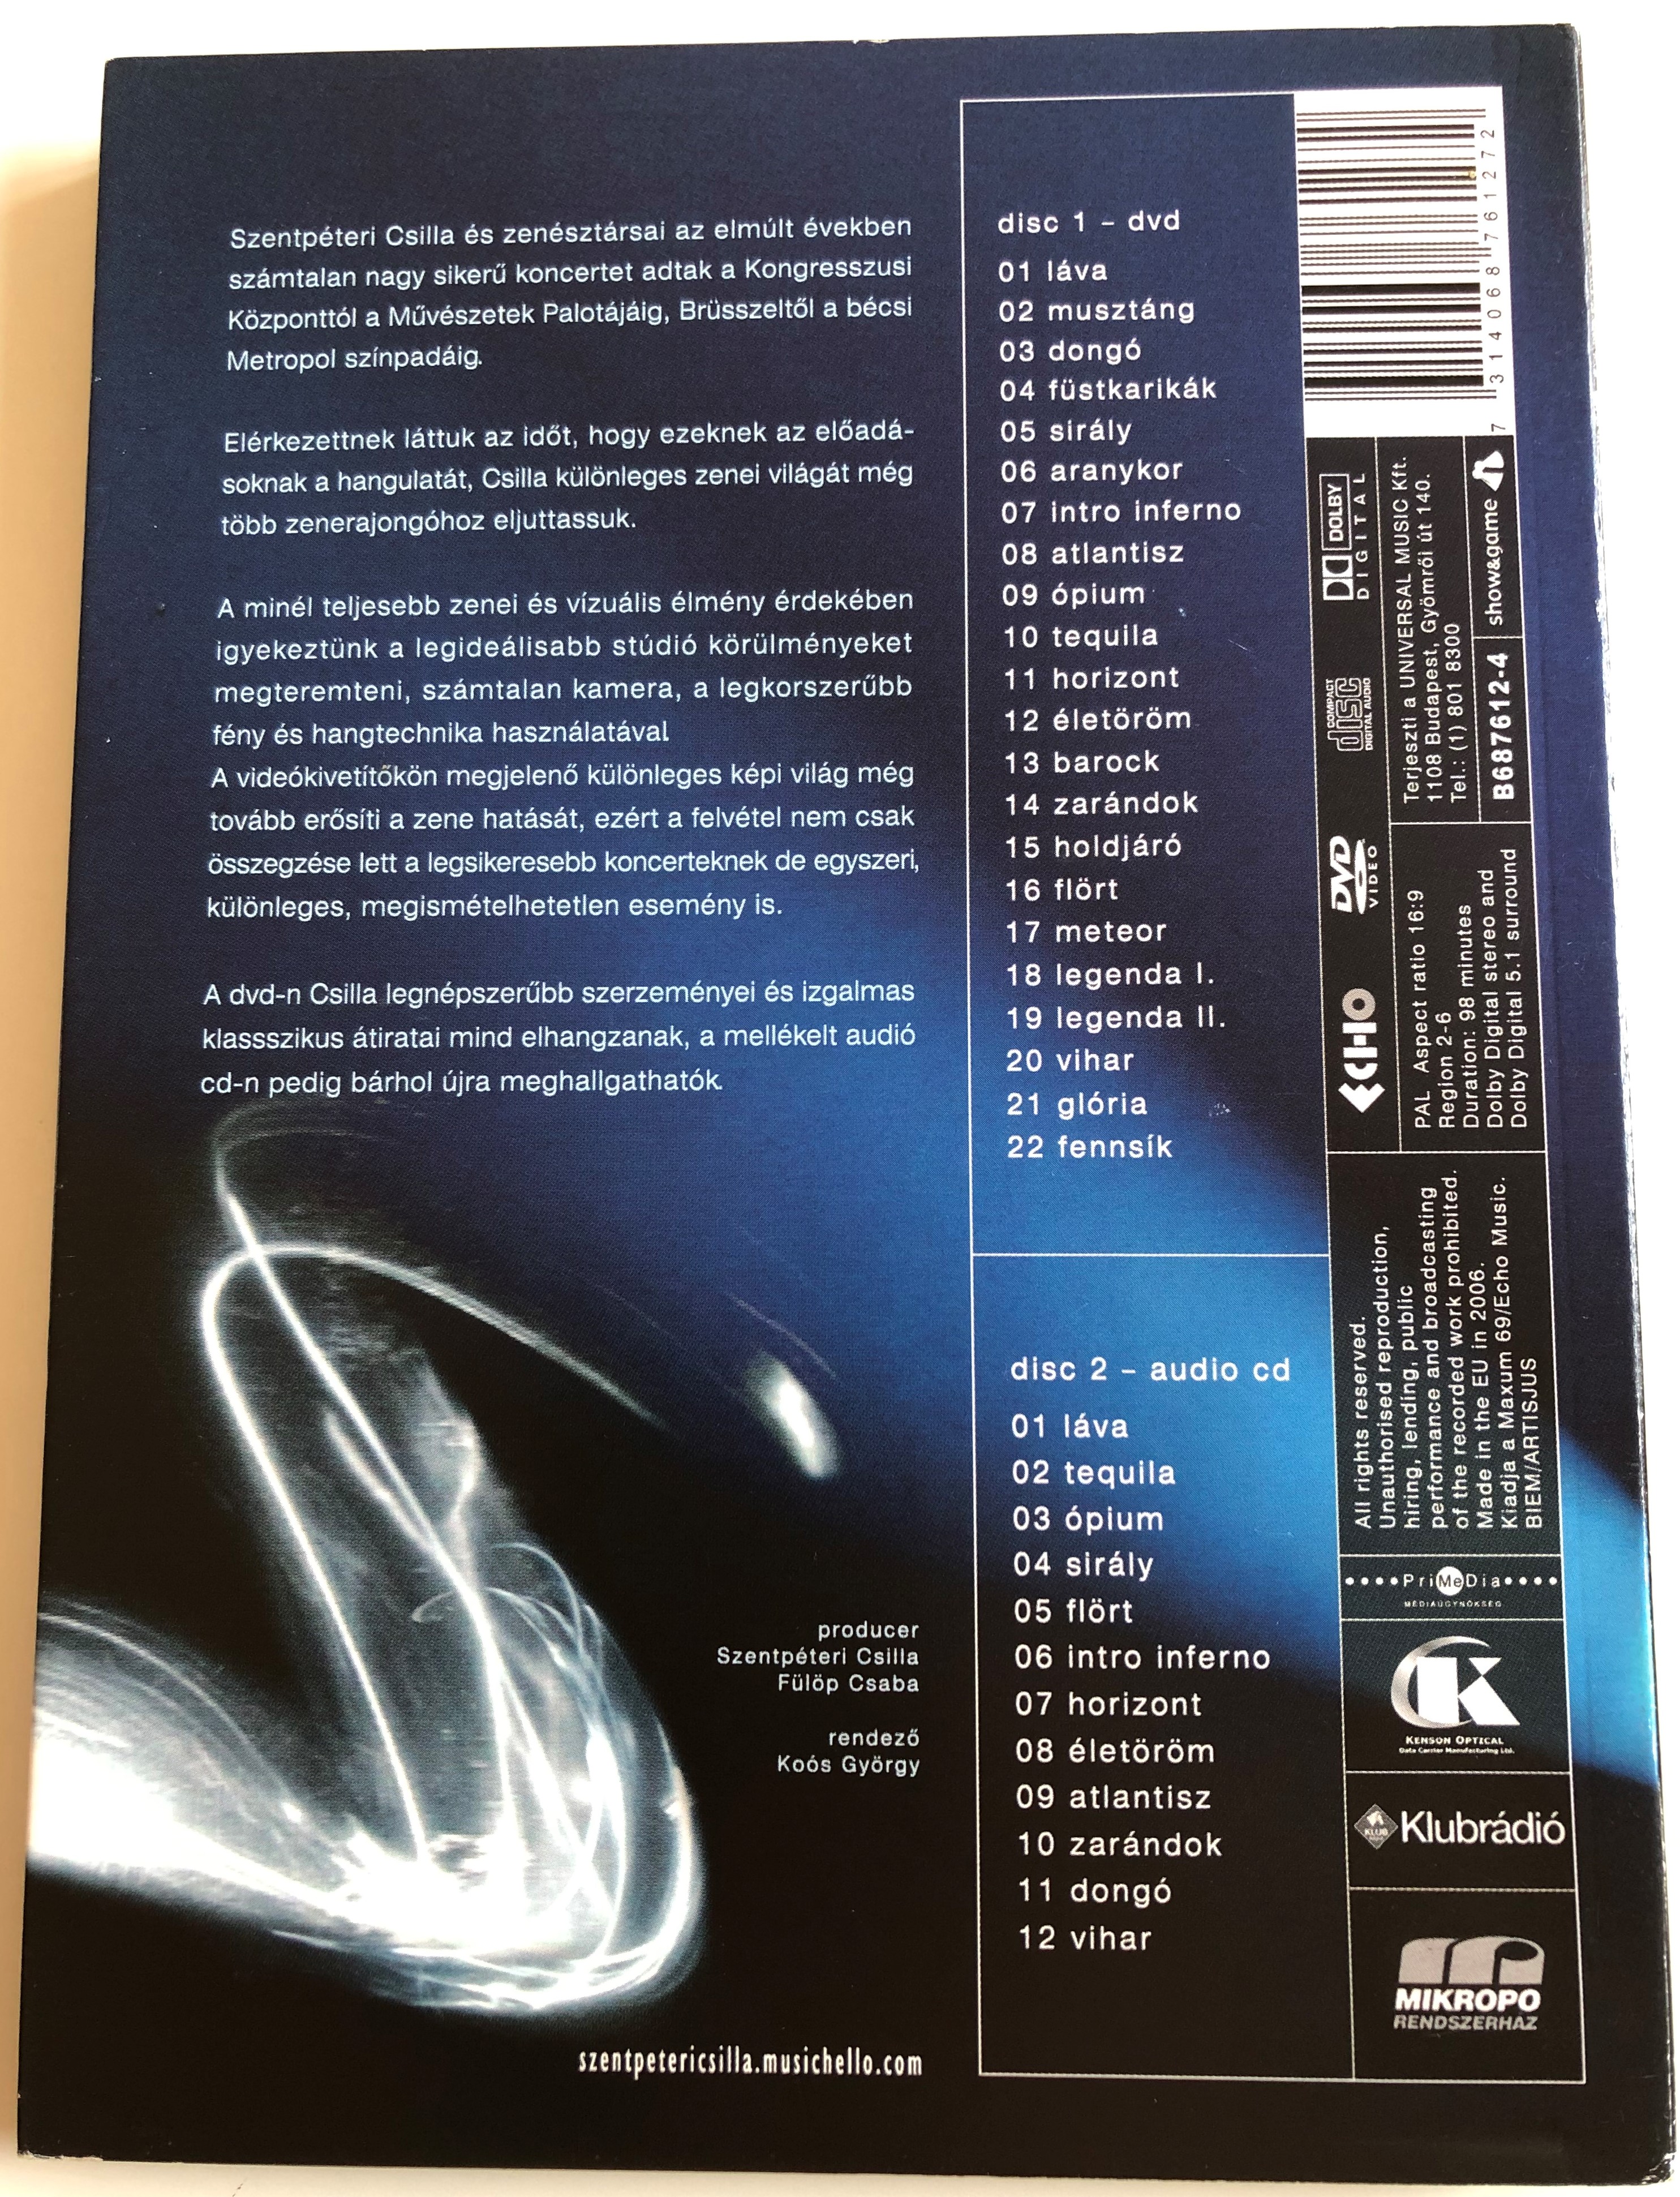  Piano Planet - Szentpéteri Csilla DVD&Audio CD 8.JPG